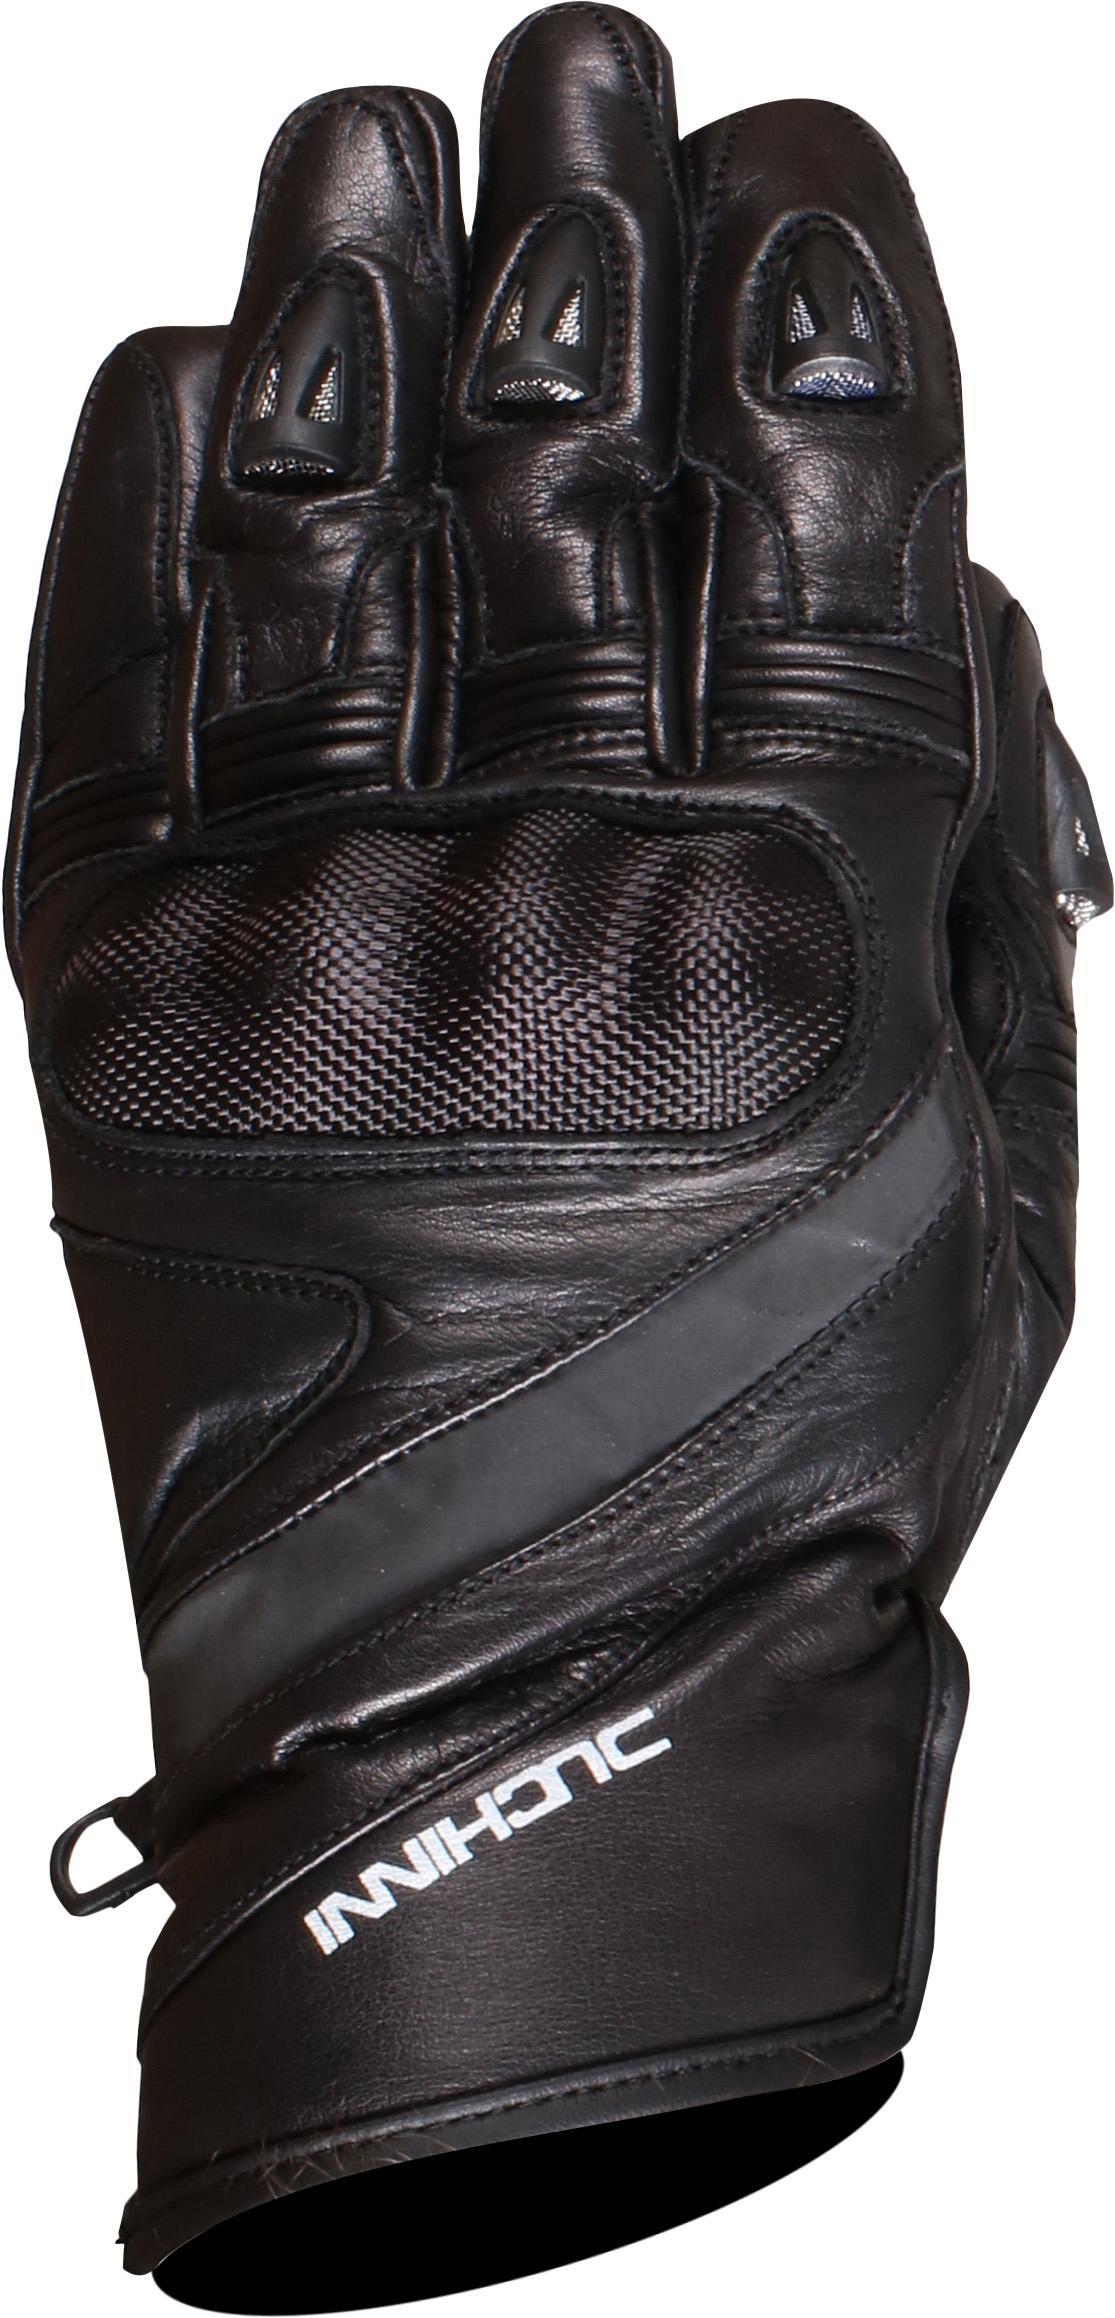 Duchinni Fresco Motorcycle Gloves - Black, Xl